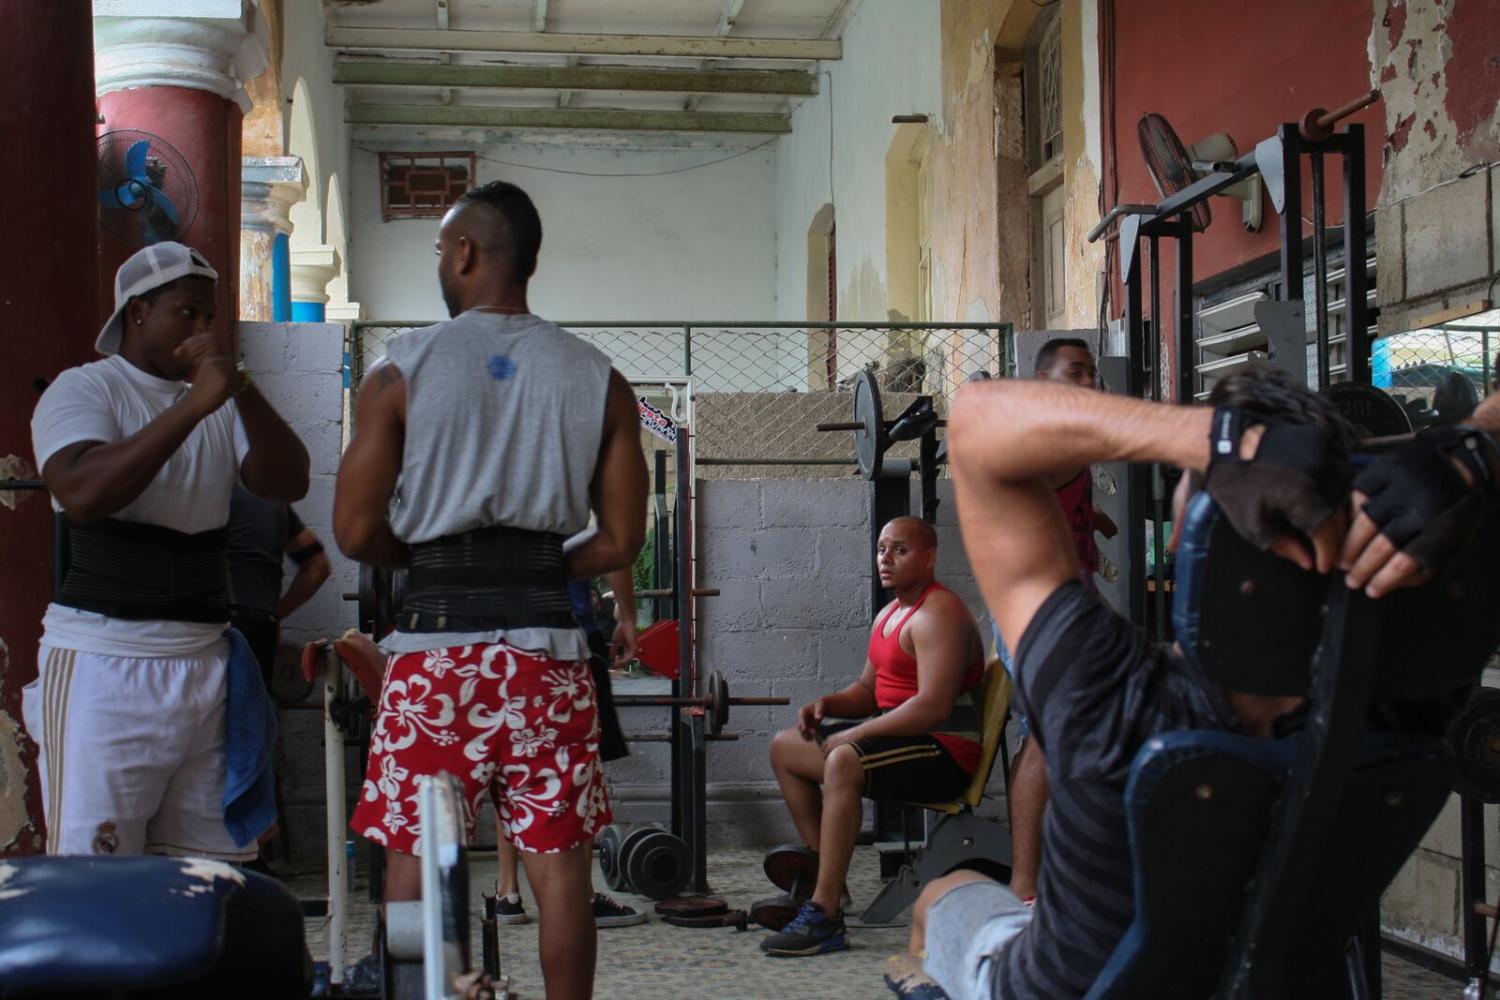 Fitness+culture+in+Cuba